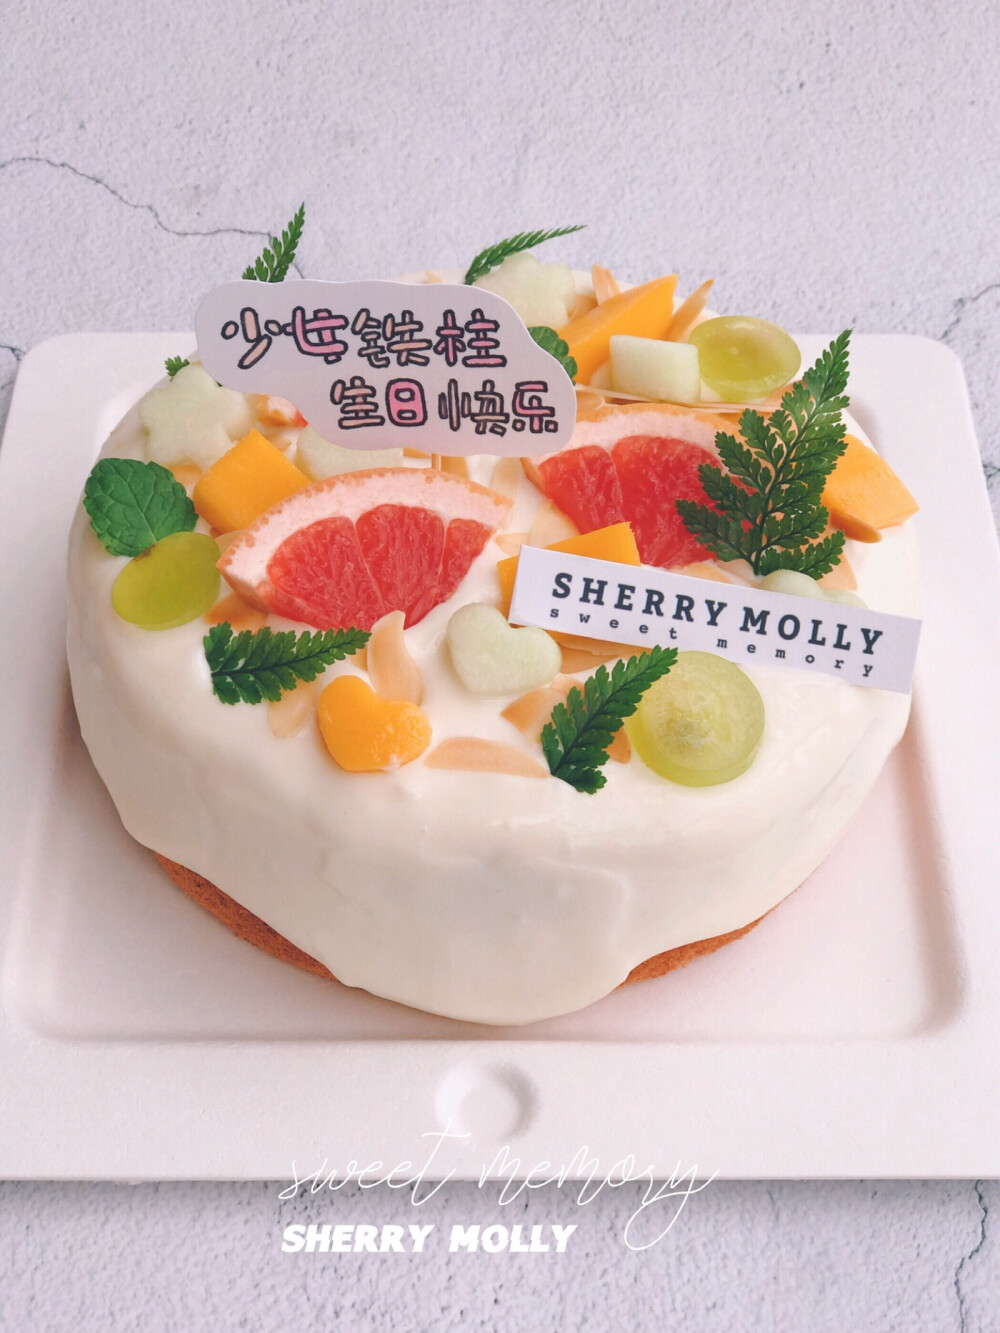 #SHERRY Molly家の下午茶#—『红丝绒爆浆cake』送一个特别可爱活泼的少女的生日cake～也是悄悄放了一些超可爱的水果来衬她的可爱气质了